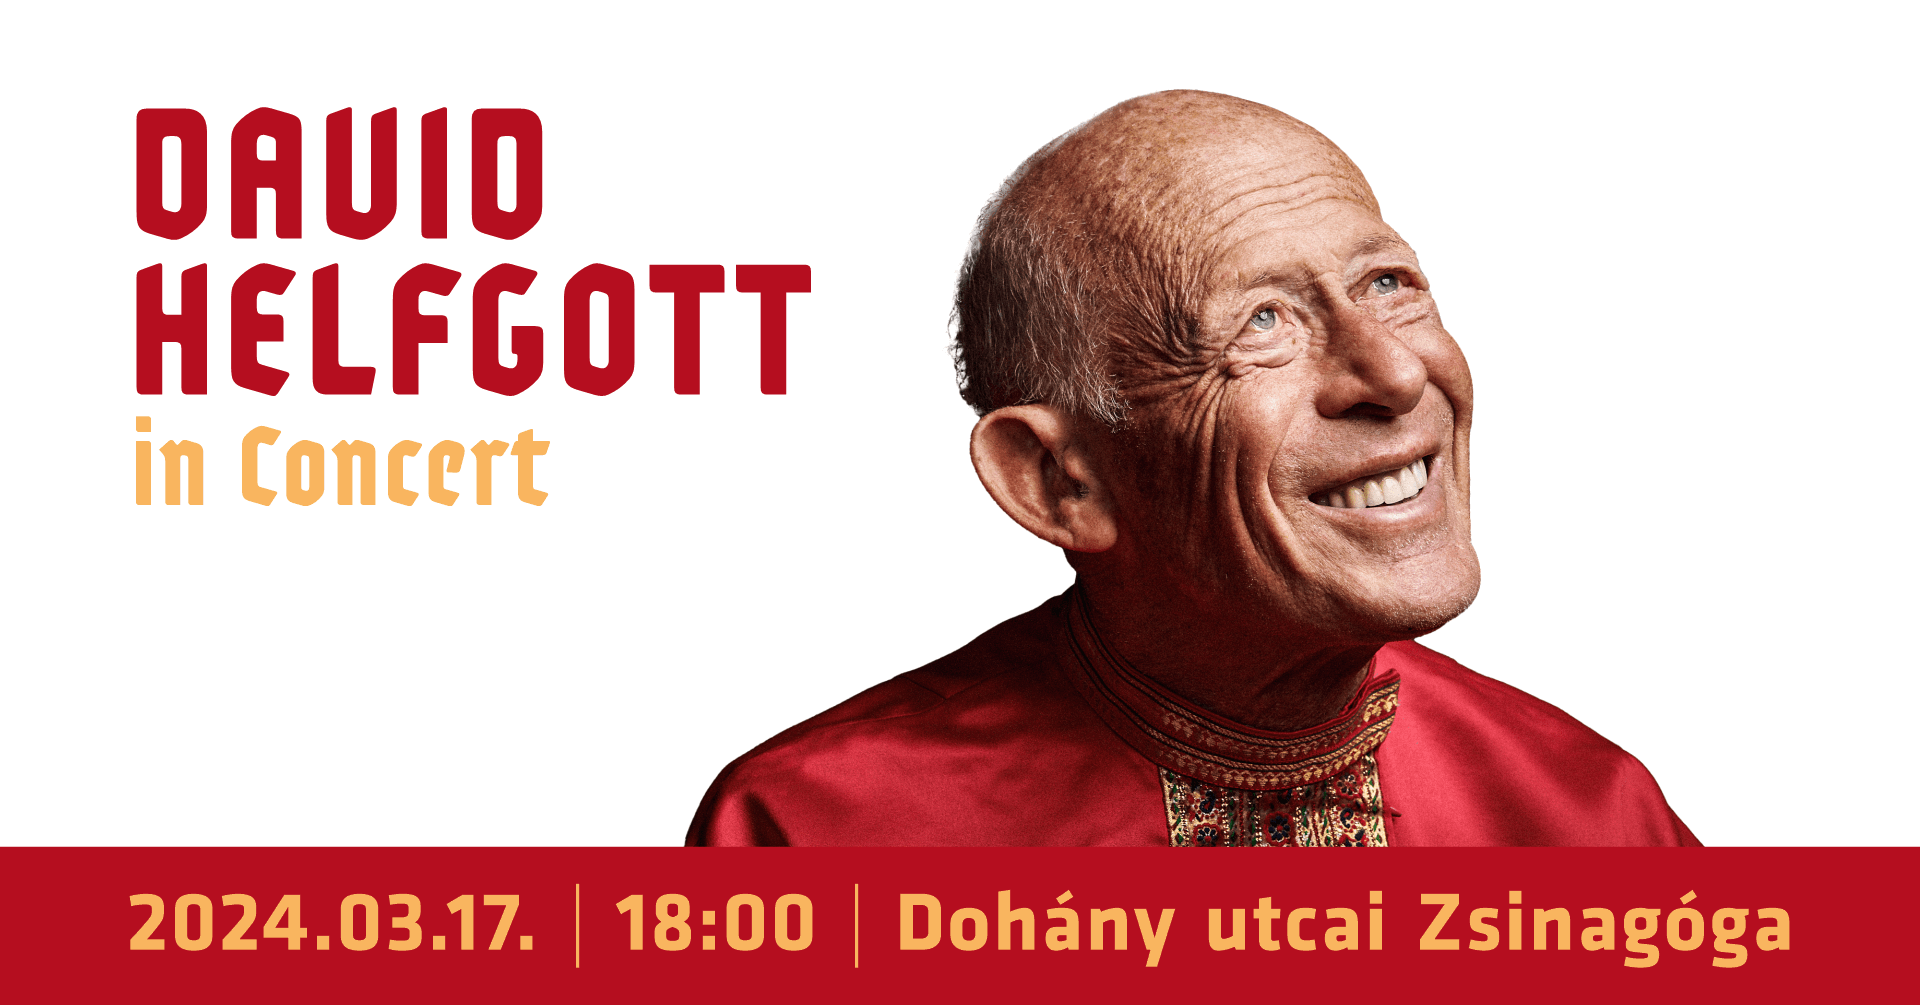 David Helfgott Concert, Dohány Street Synagogue Budapest, 17 March